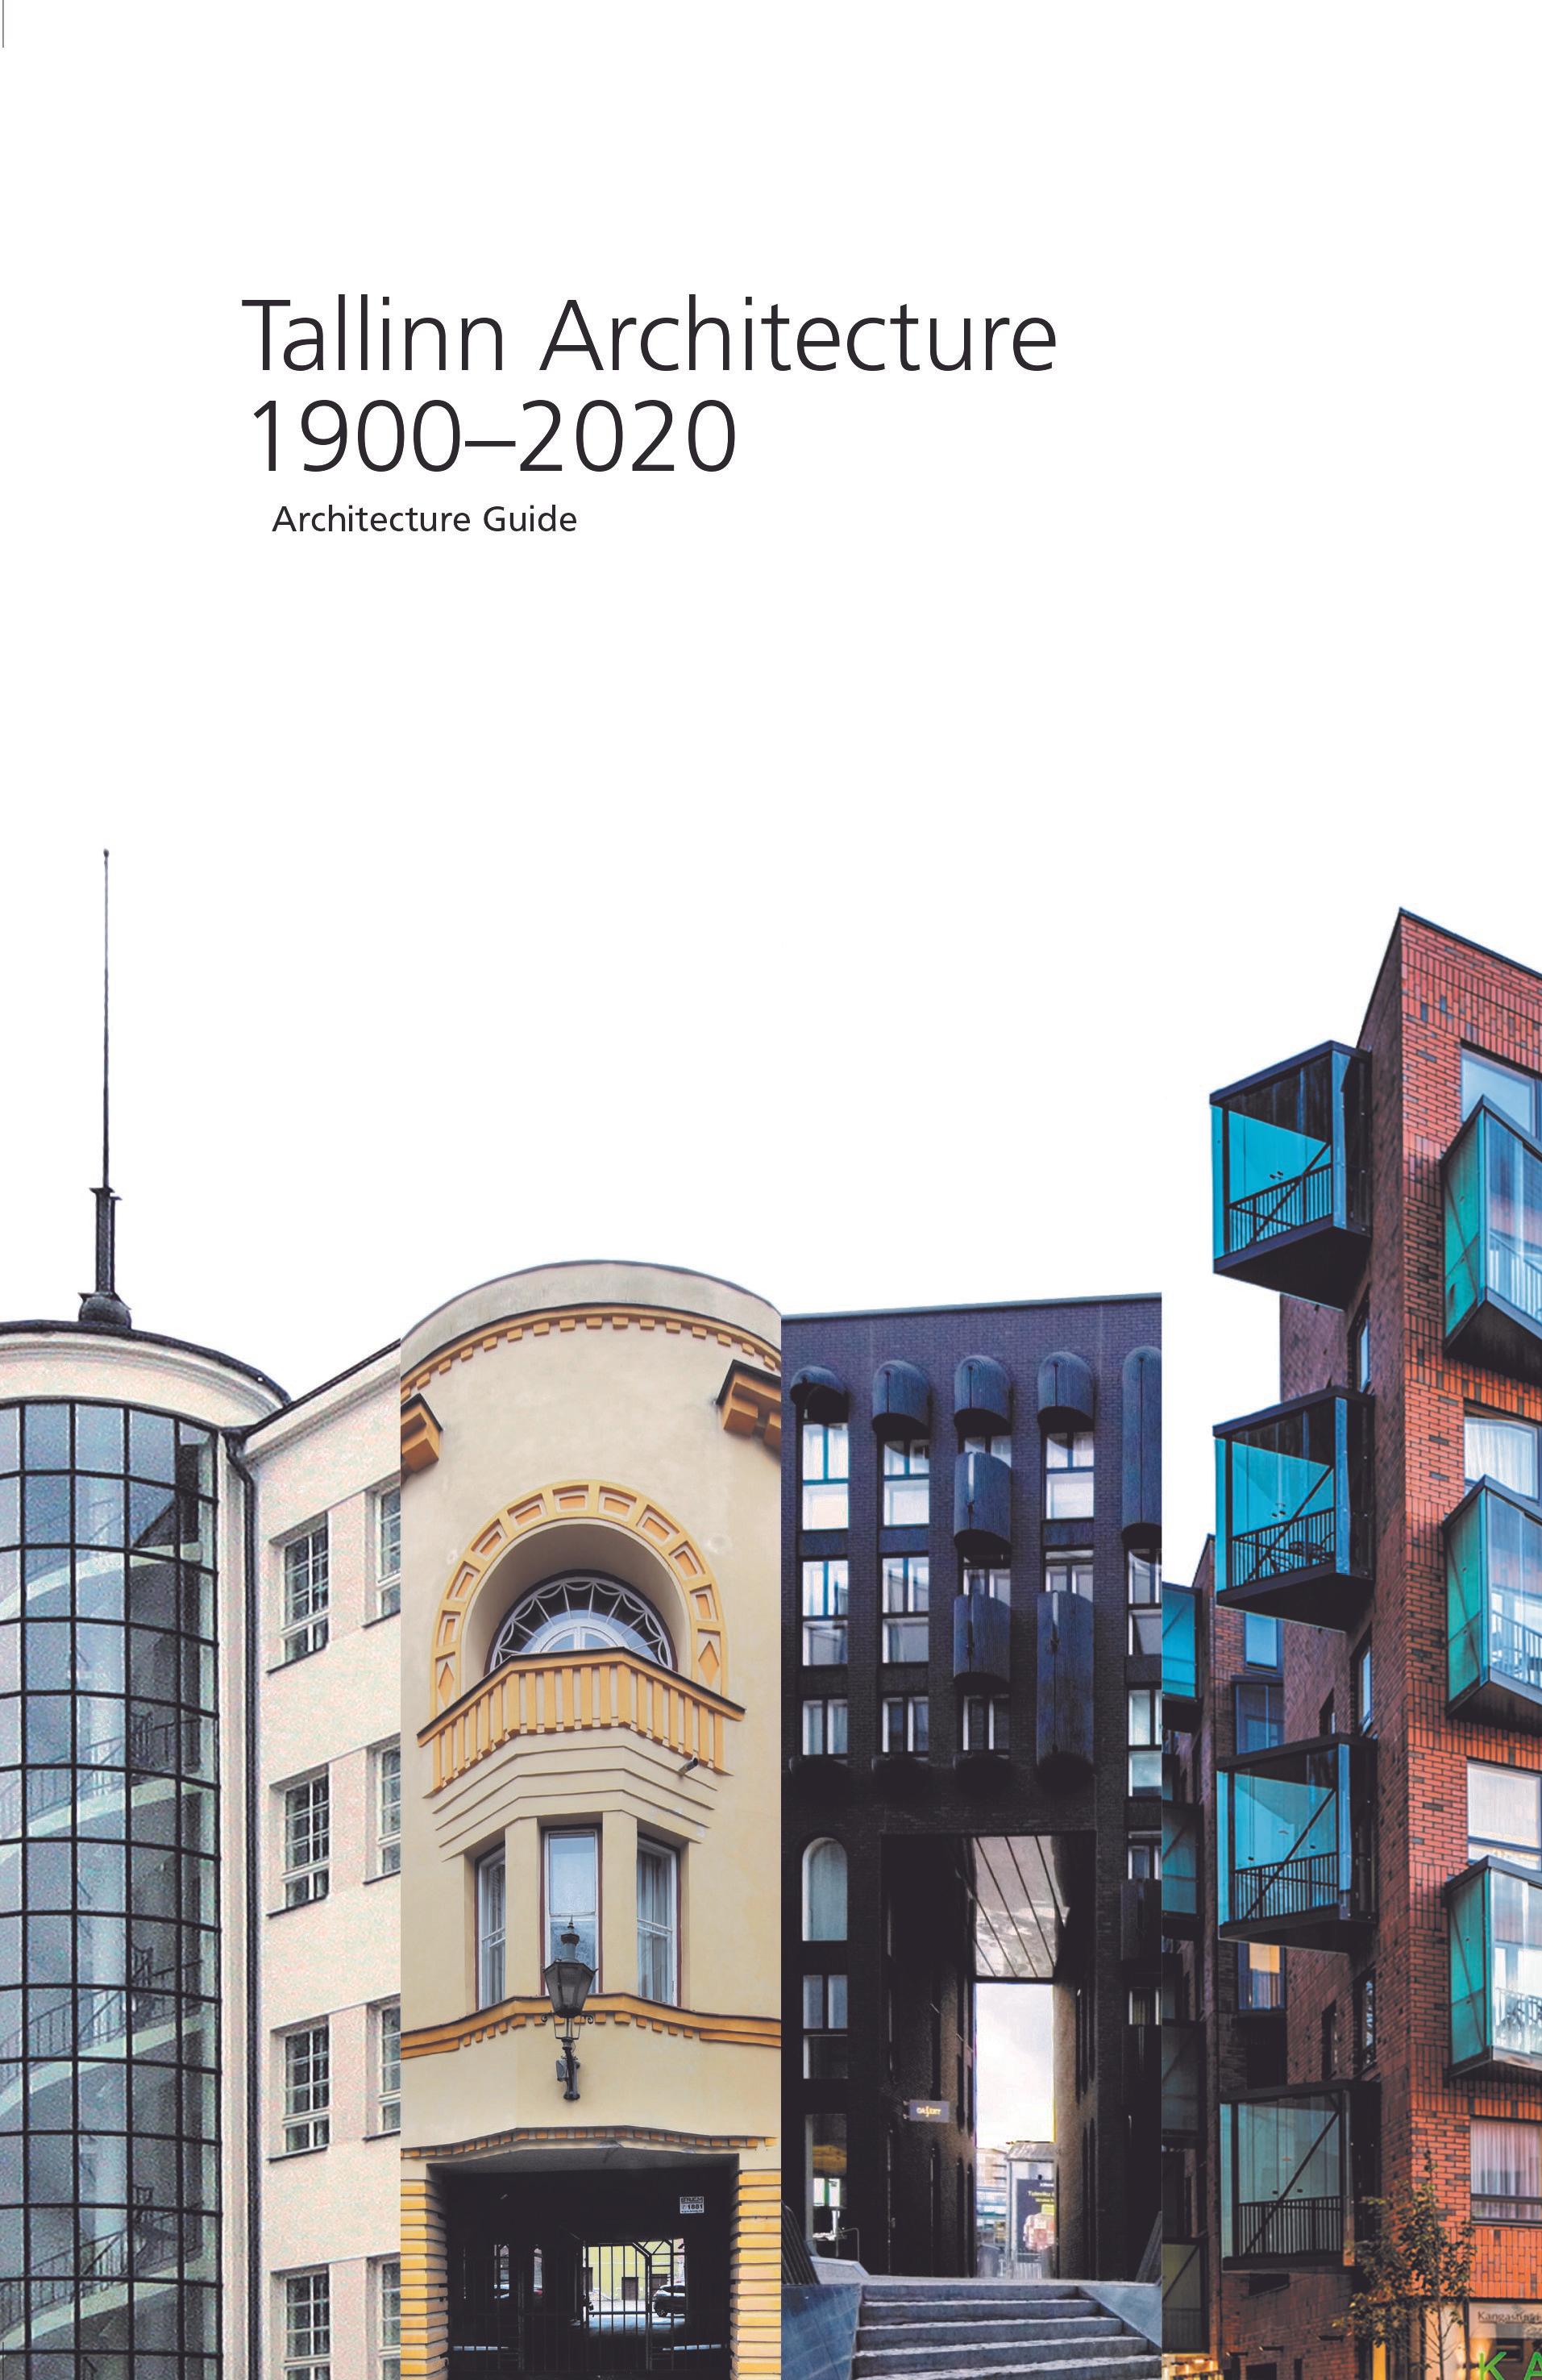 Tallinn Architecture Guide 1900-2020